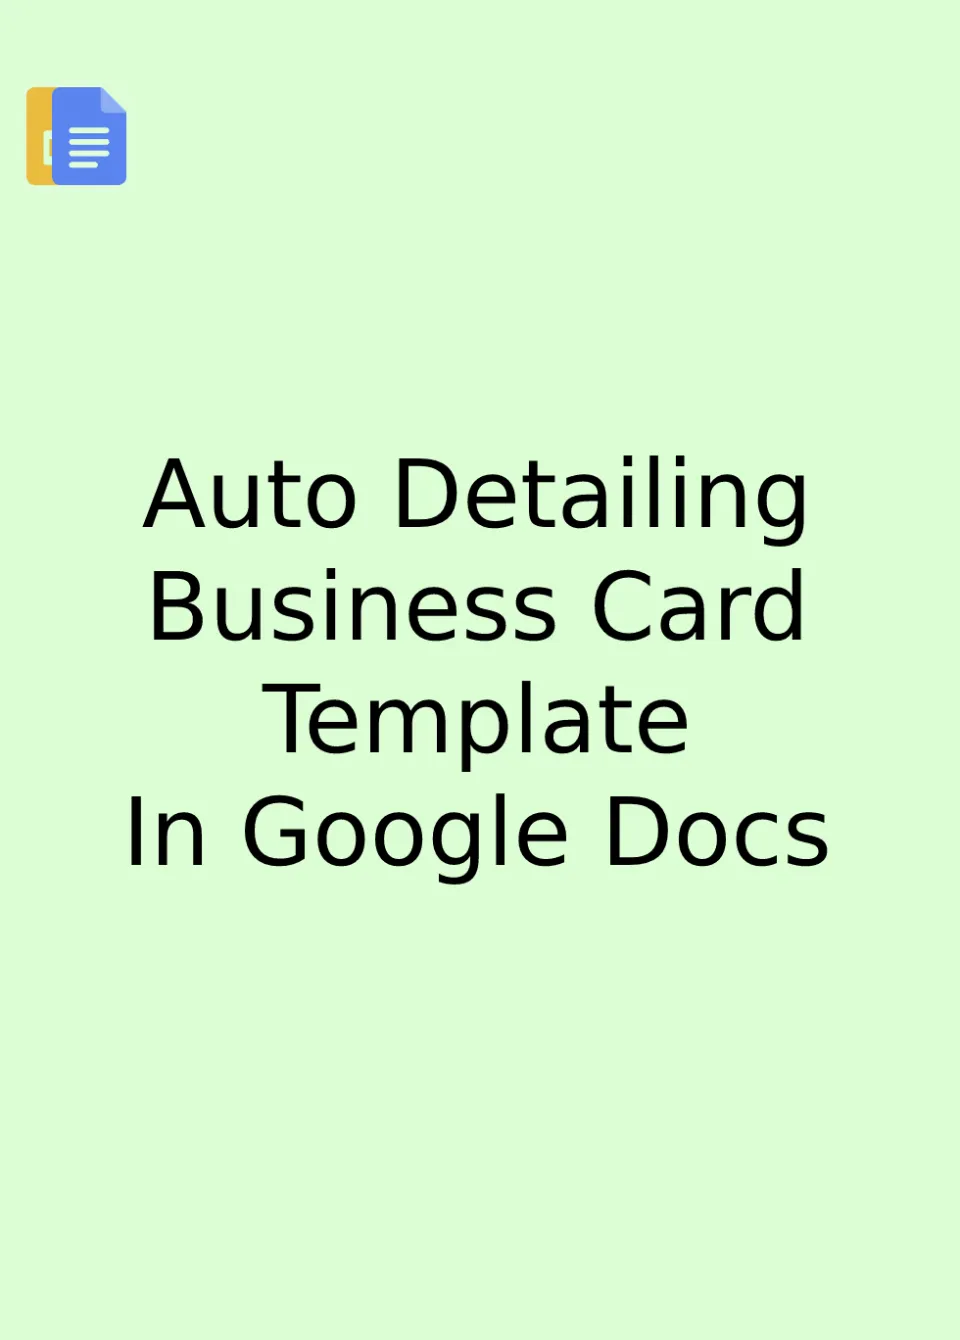 Auto Detailing Business Card Template Google Docs